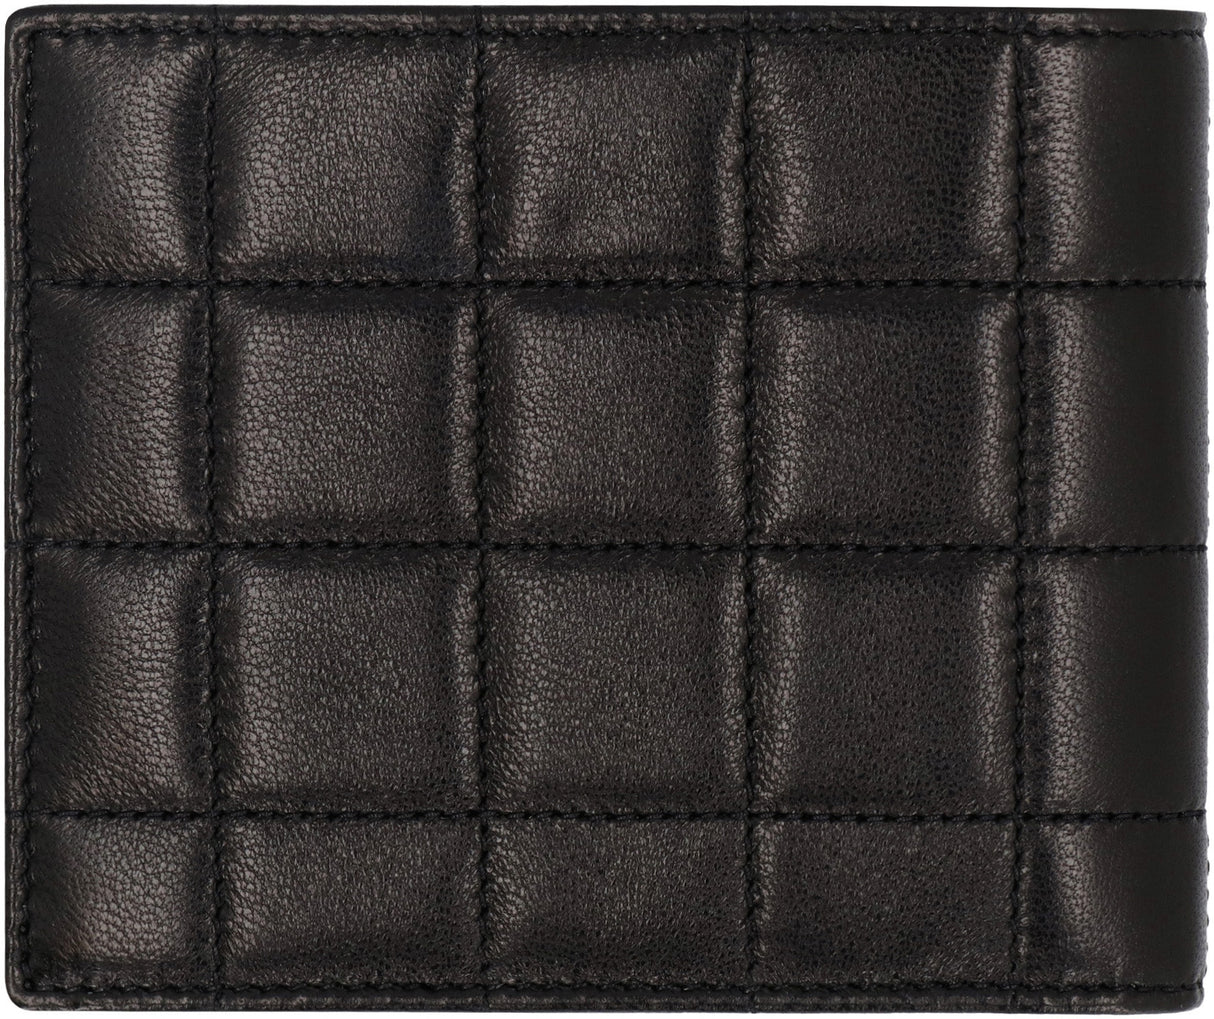 SAINT LAURENT Luxury Men's Leather Wallet with Multiple Compartments - Black